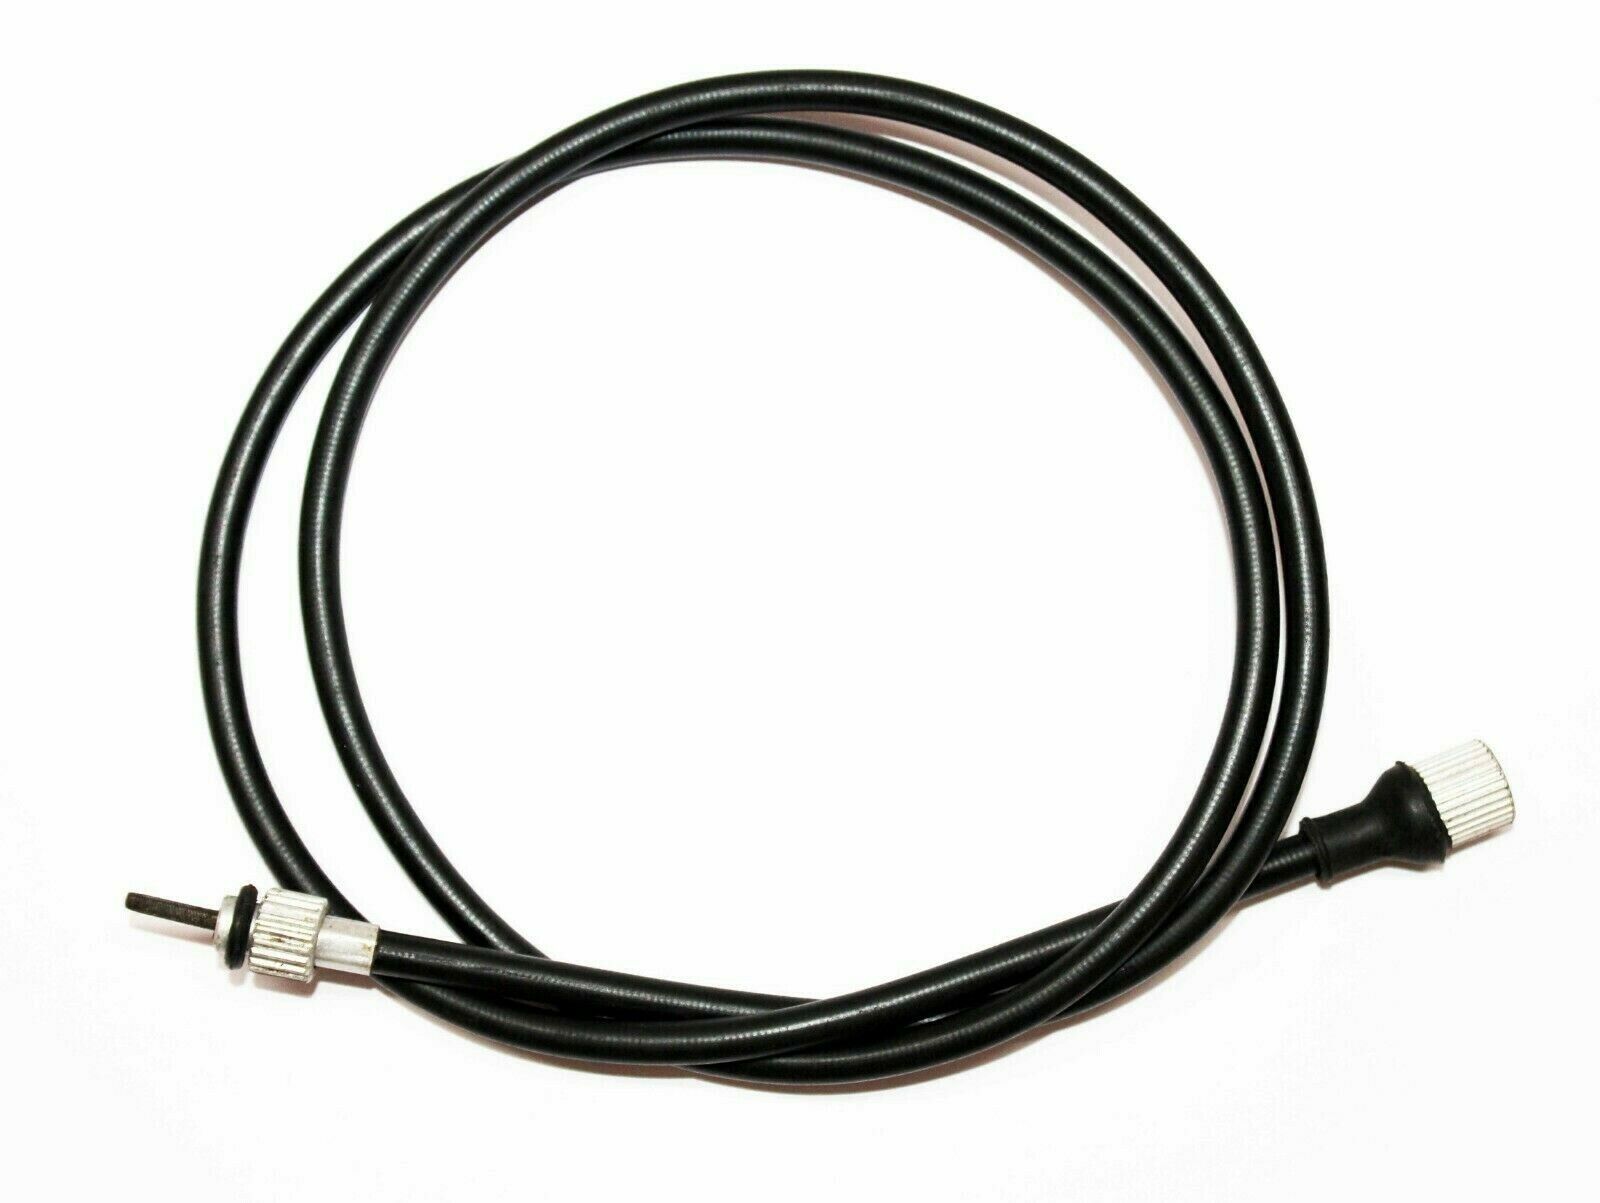 5 X Lambretta Speedo Black Indian / Italian Cable Wire Counter Meter Ecs